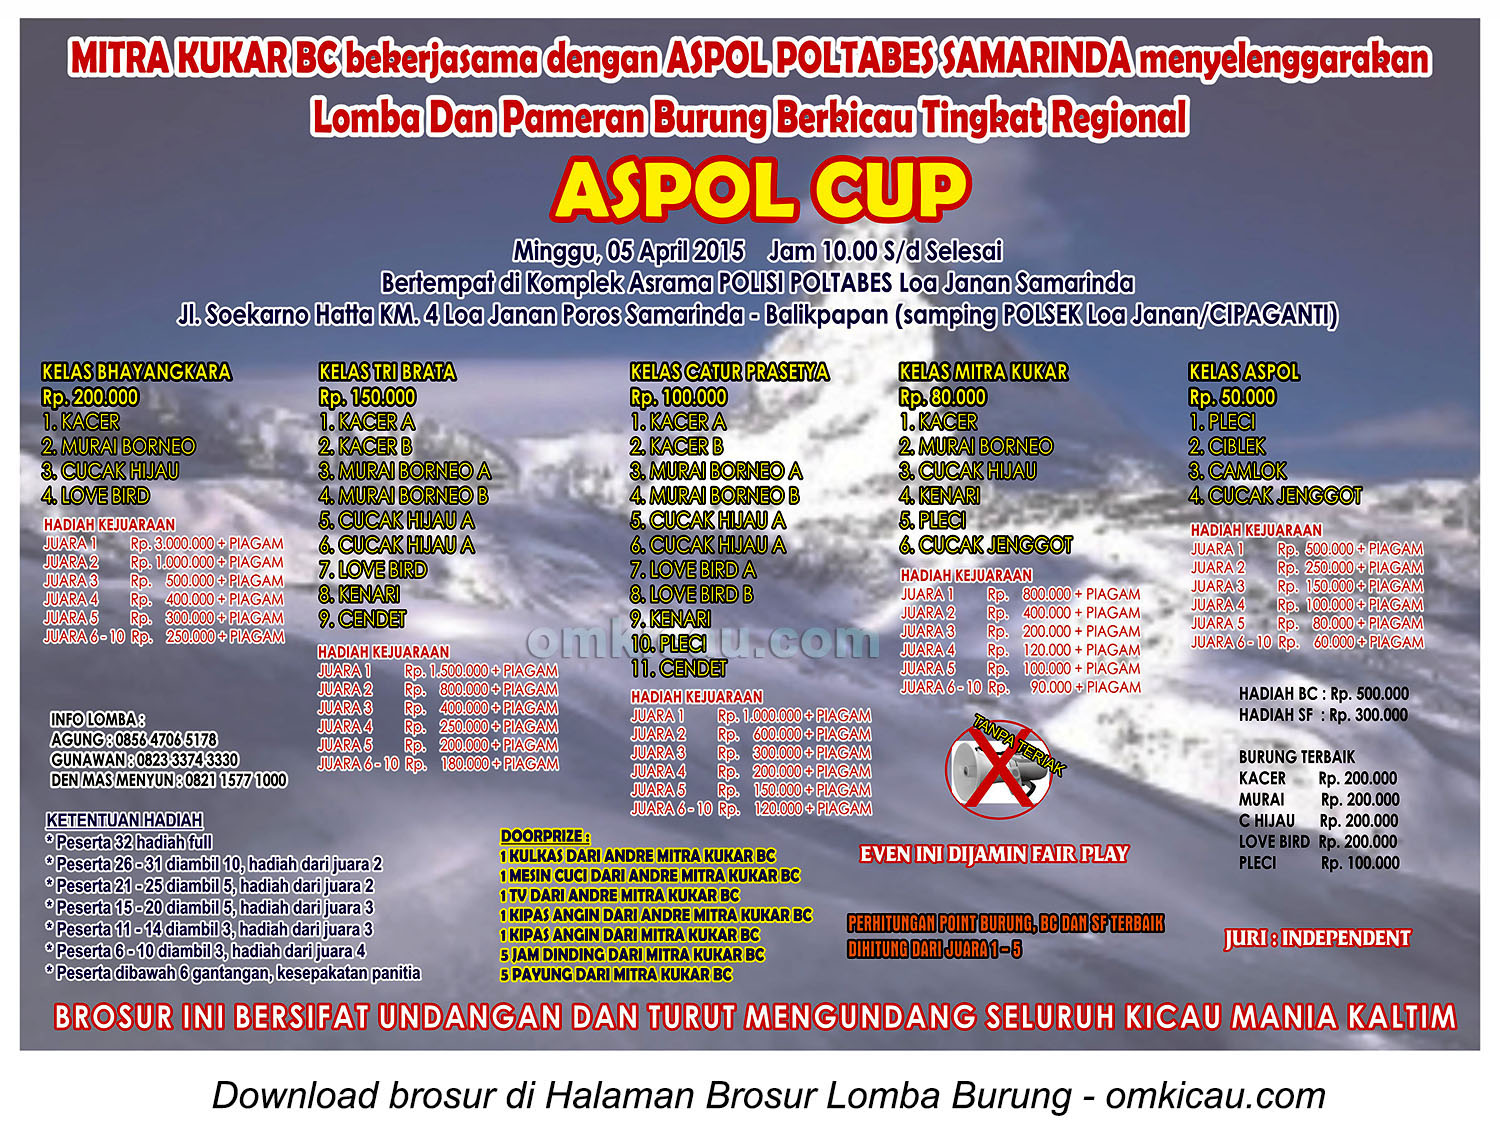 Brosur Lomba Burung Berkicau Aspol Cup, Samarinda, 5 April 2015